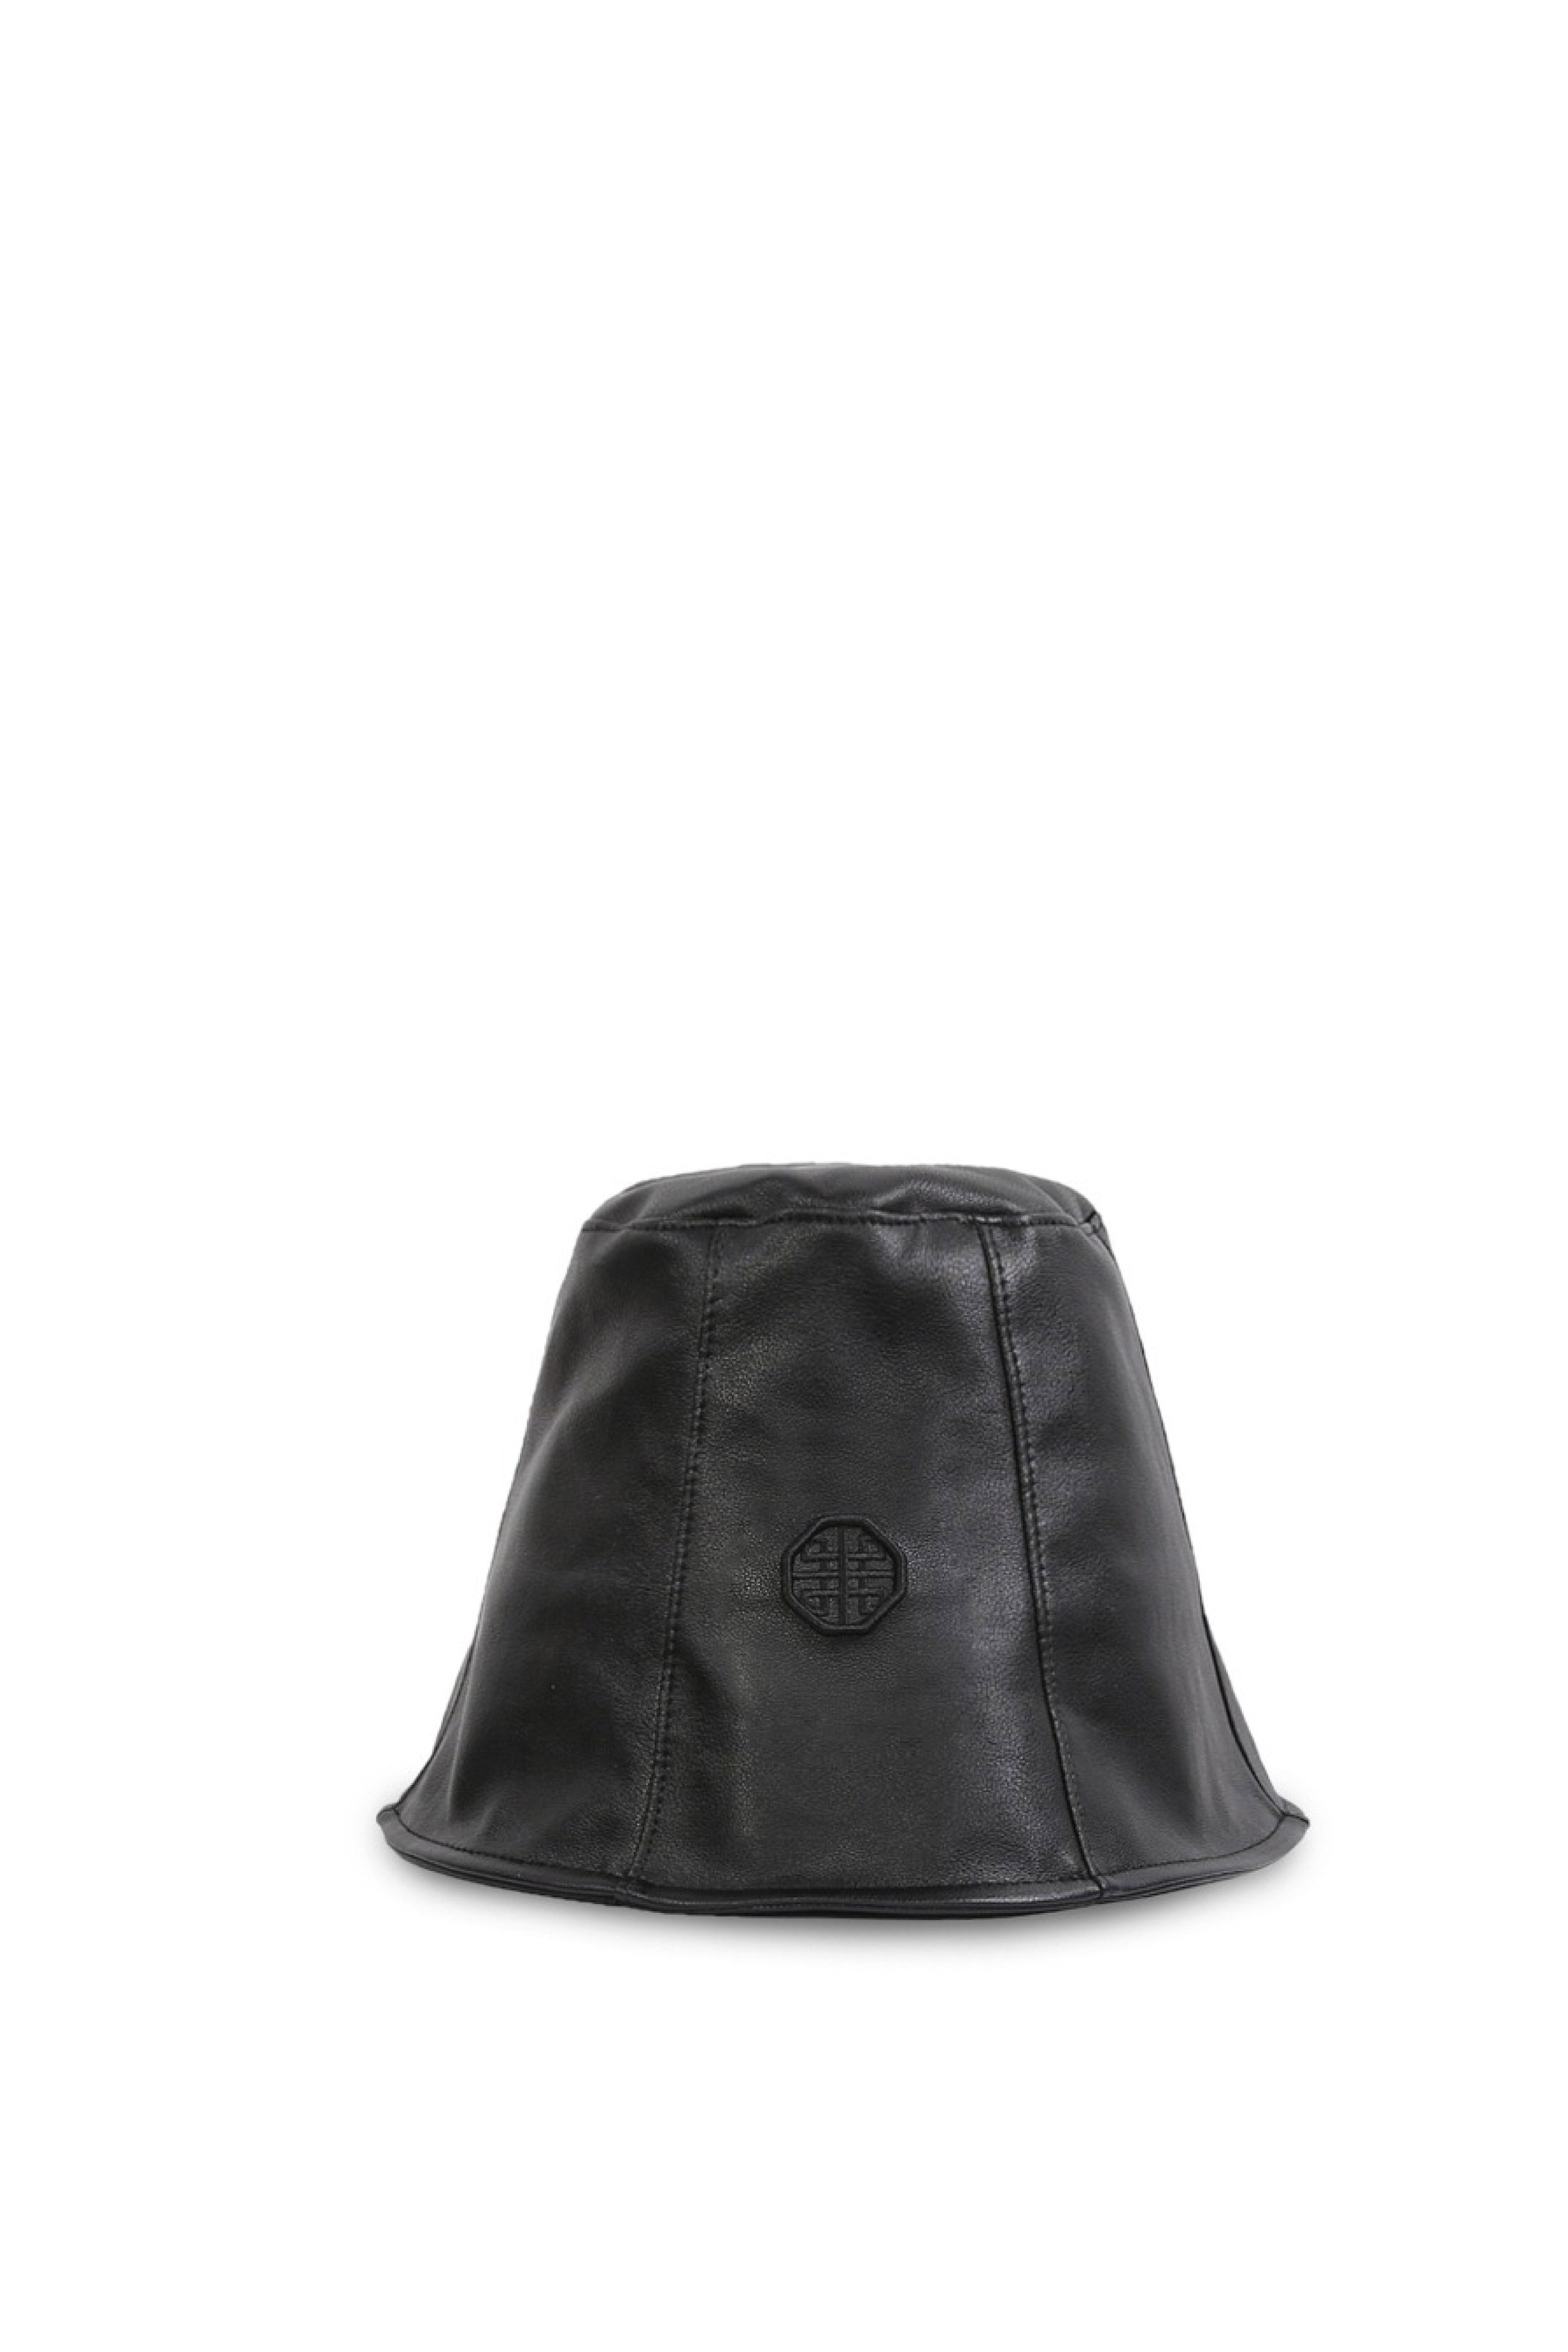 Badblood Leather Bucket Hat Black